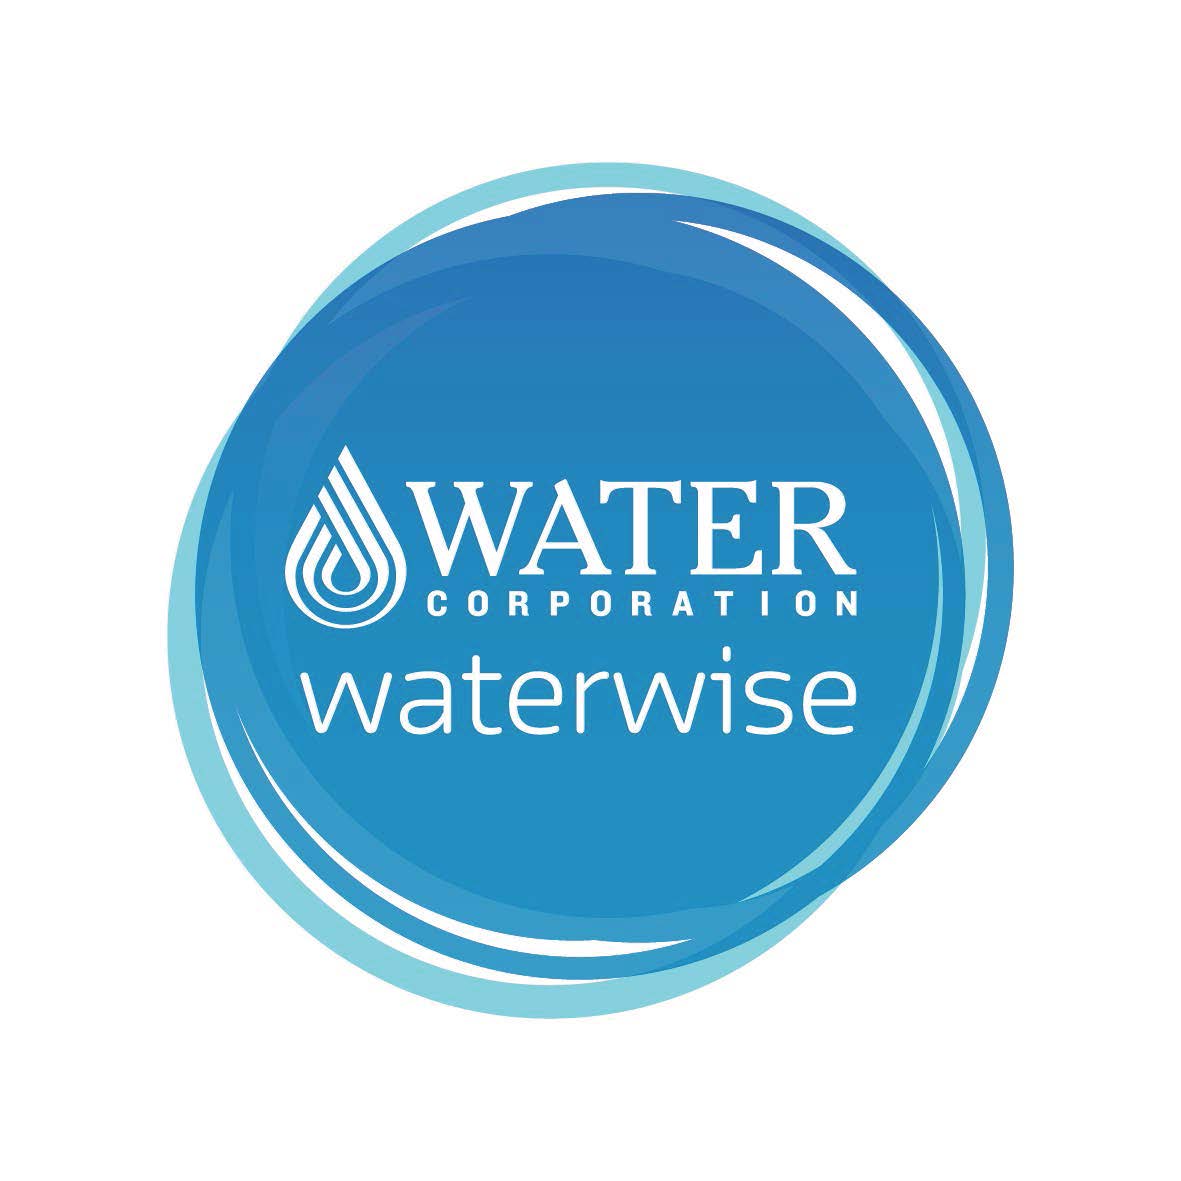 Water Corporation Waterwise Logo